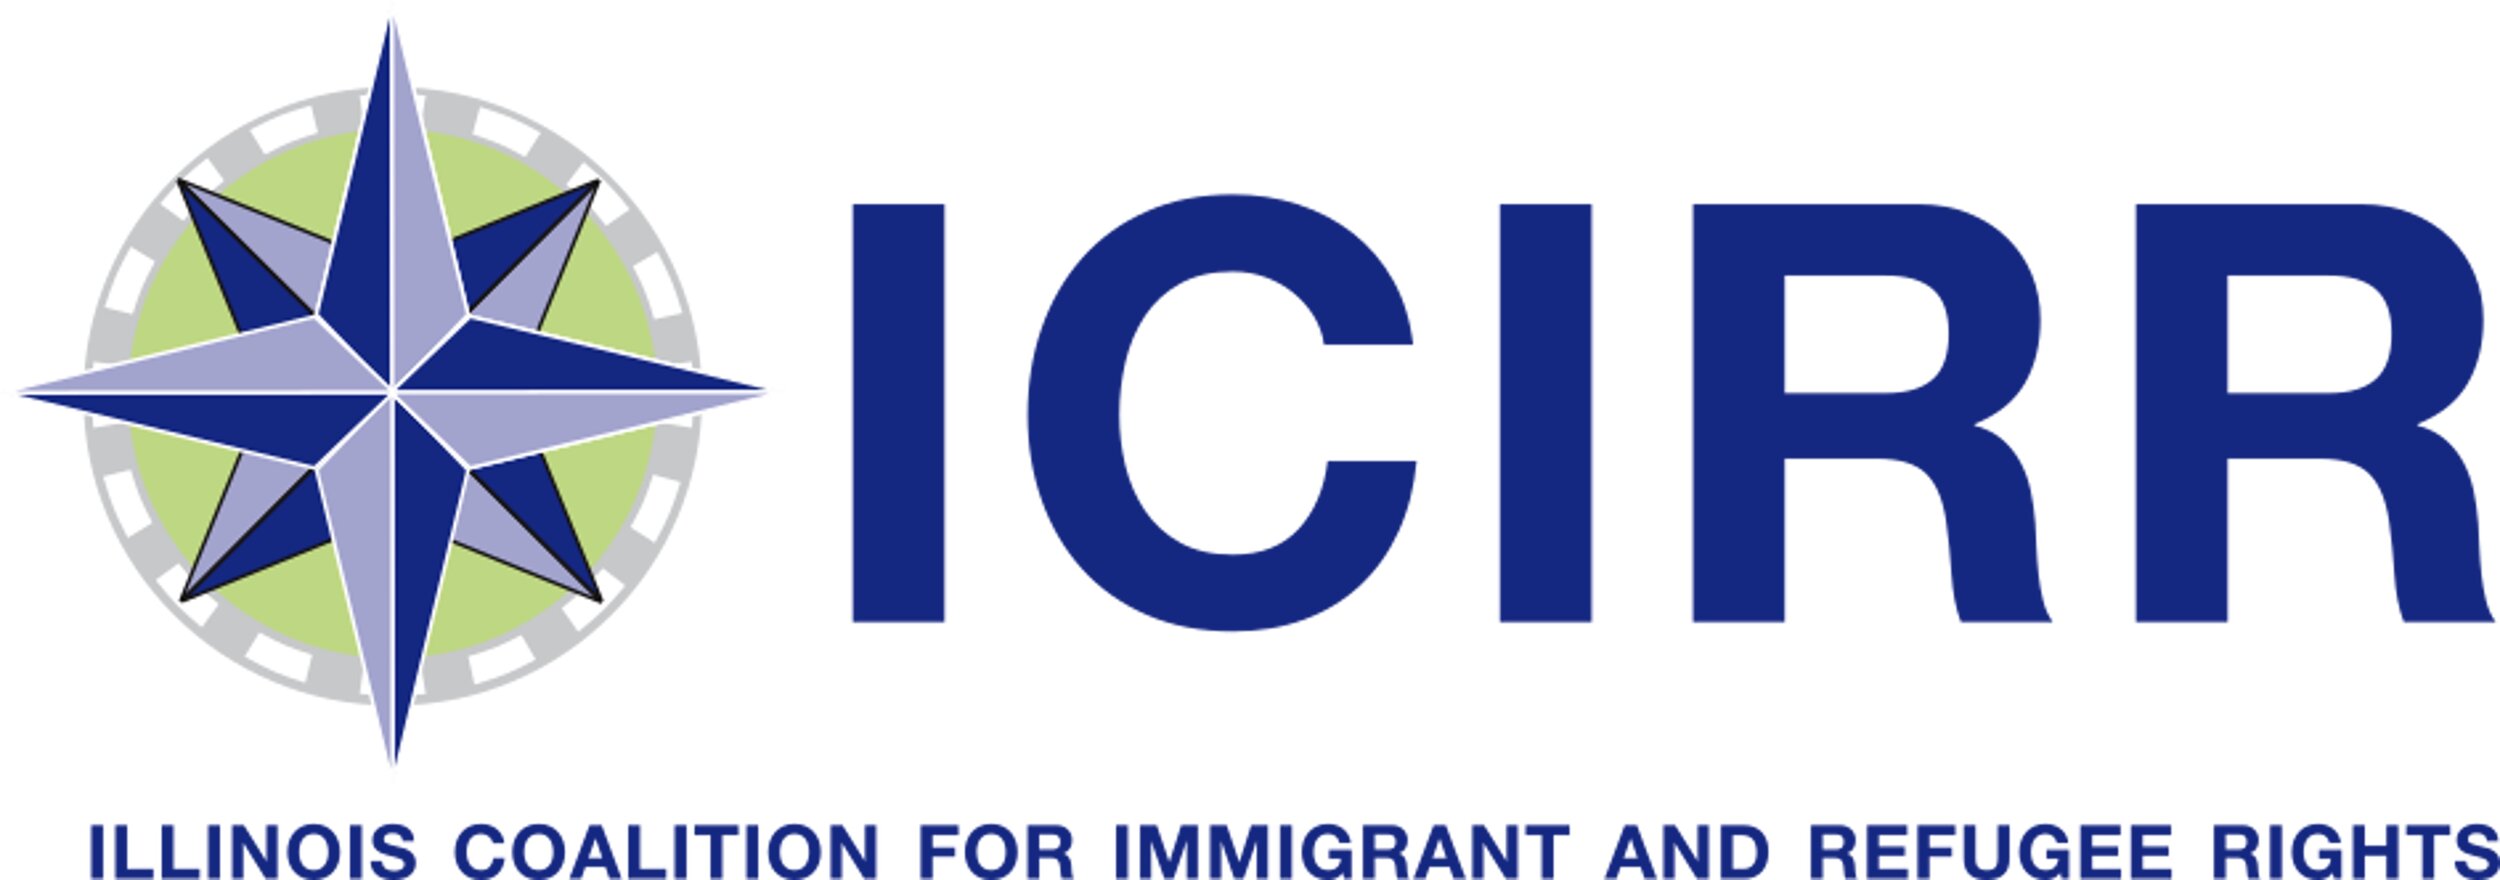 ICIRR logo Hi Res3.jpg